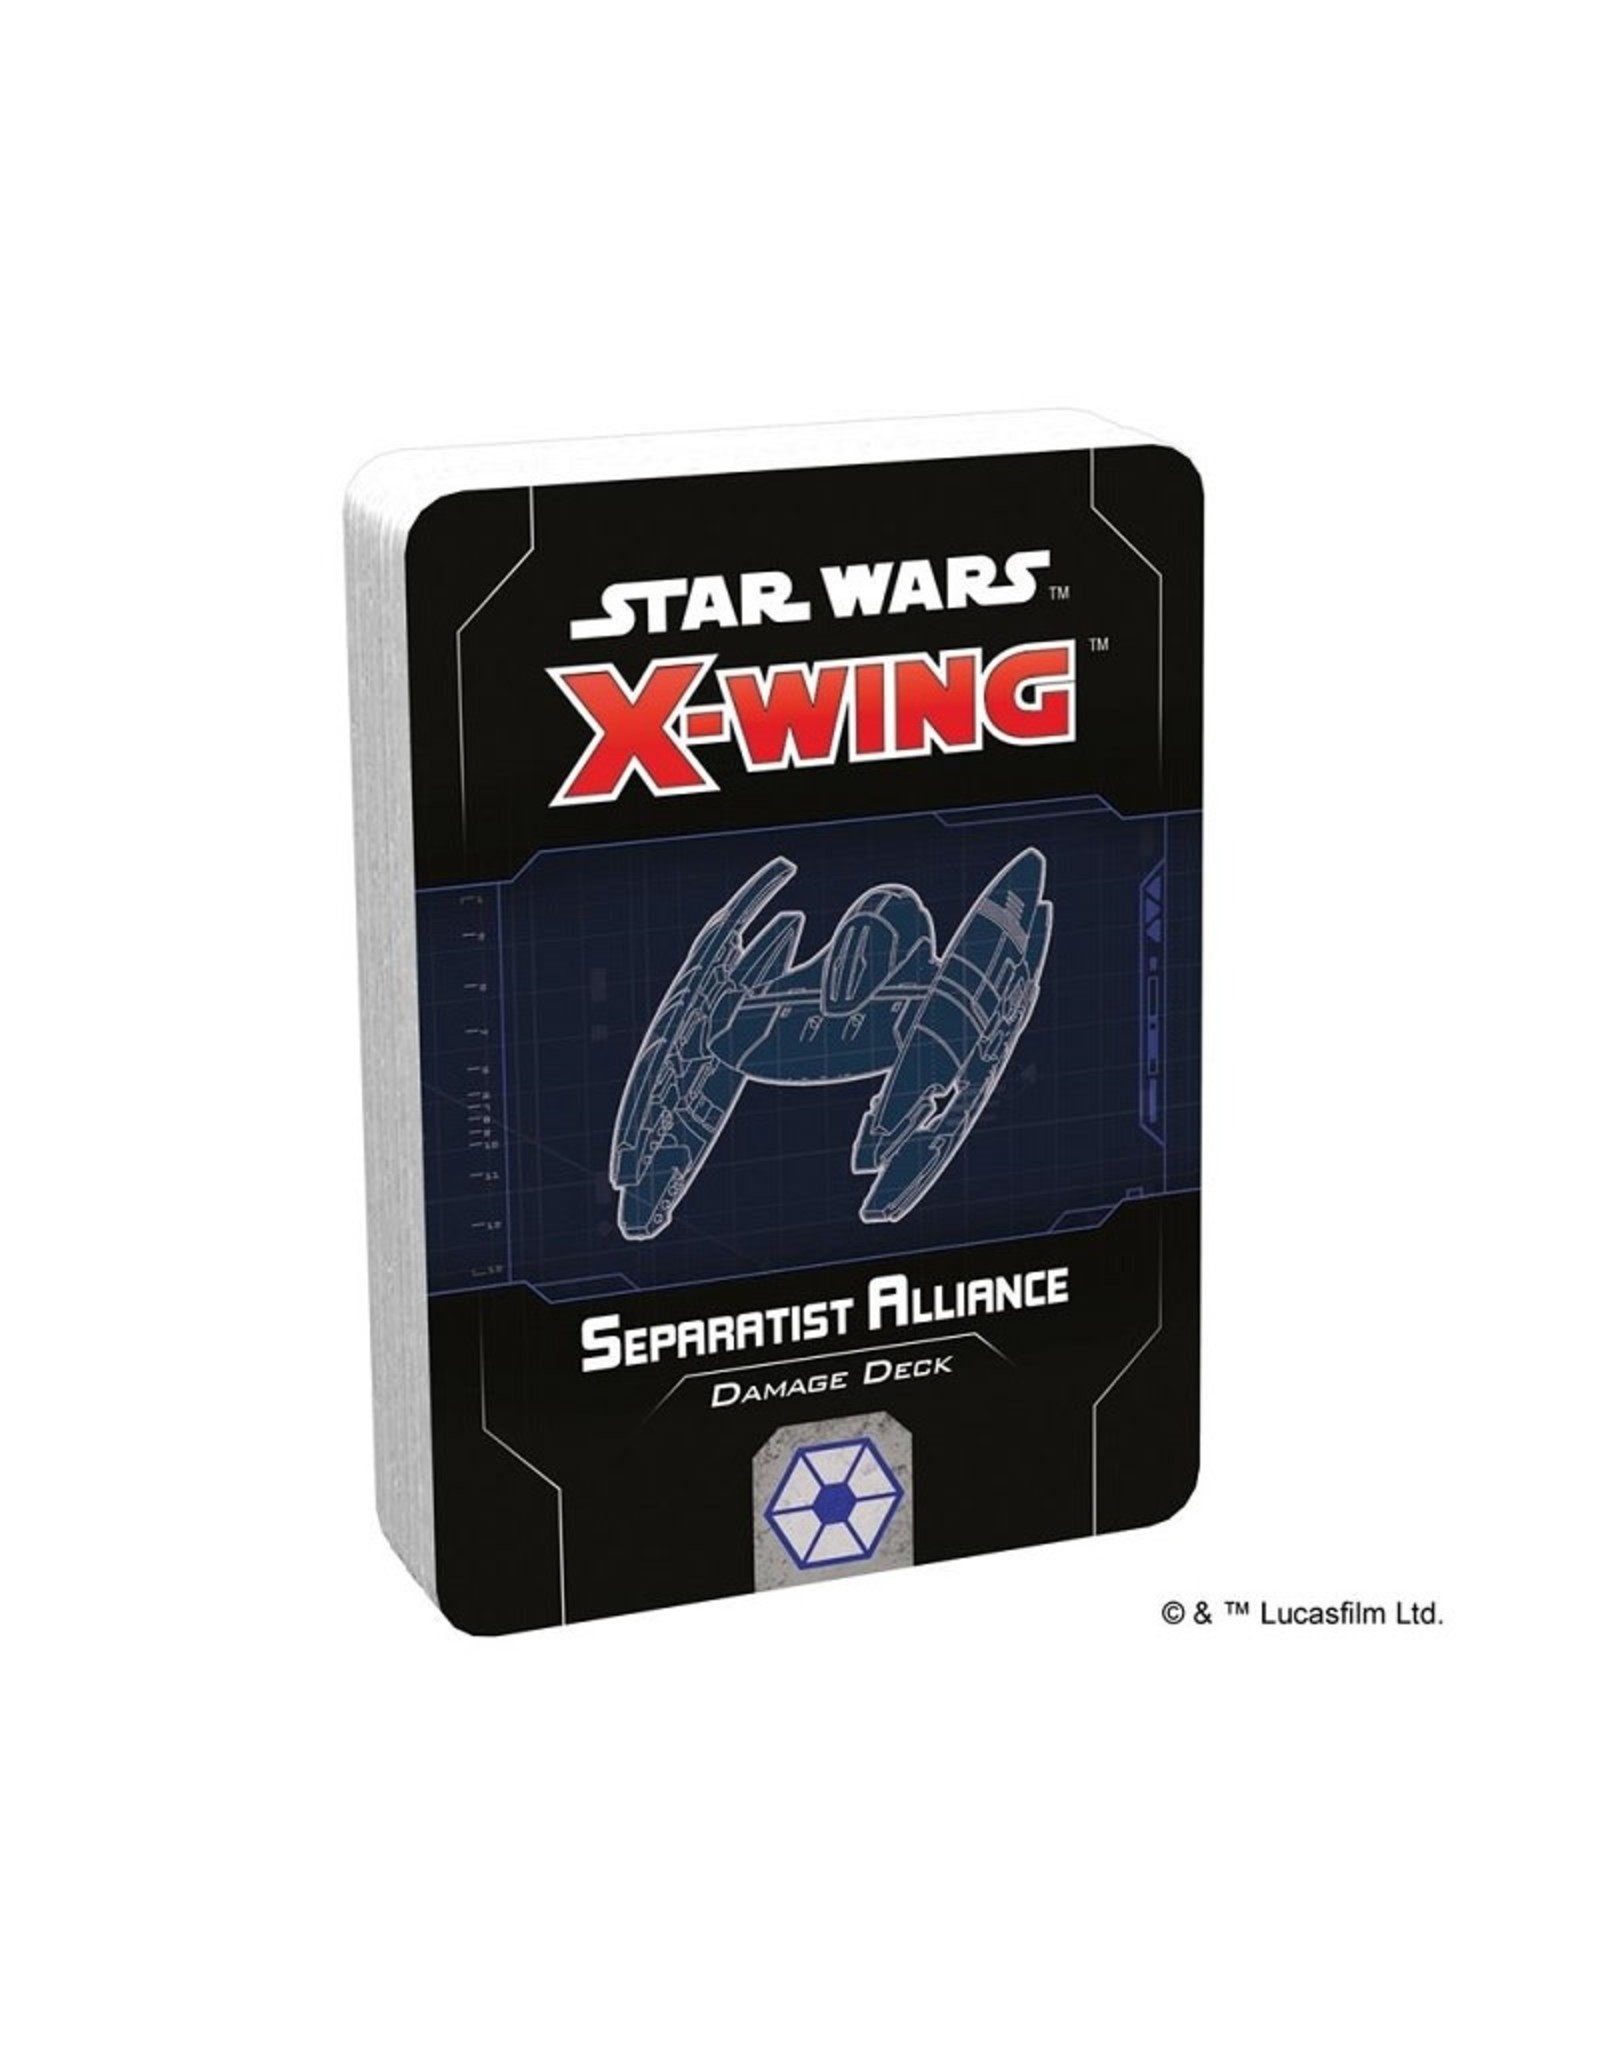 Atomic Mass Games Star Wars X-Wing: Separatist Alliance Damage Deck - 2nd Edition